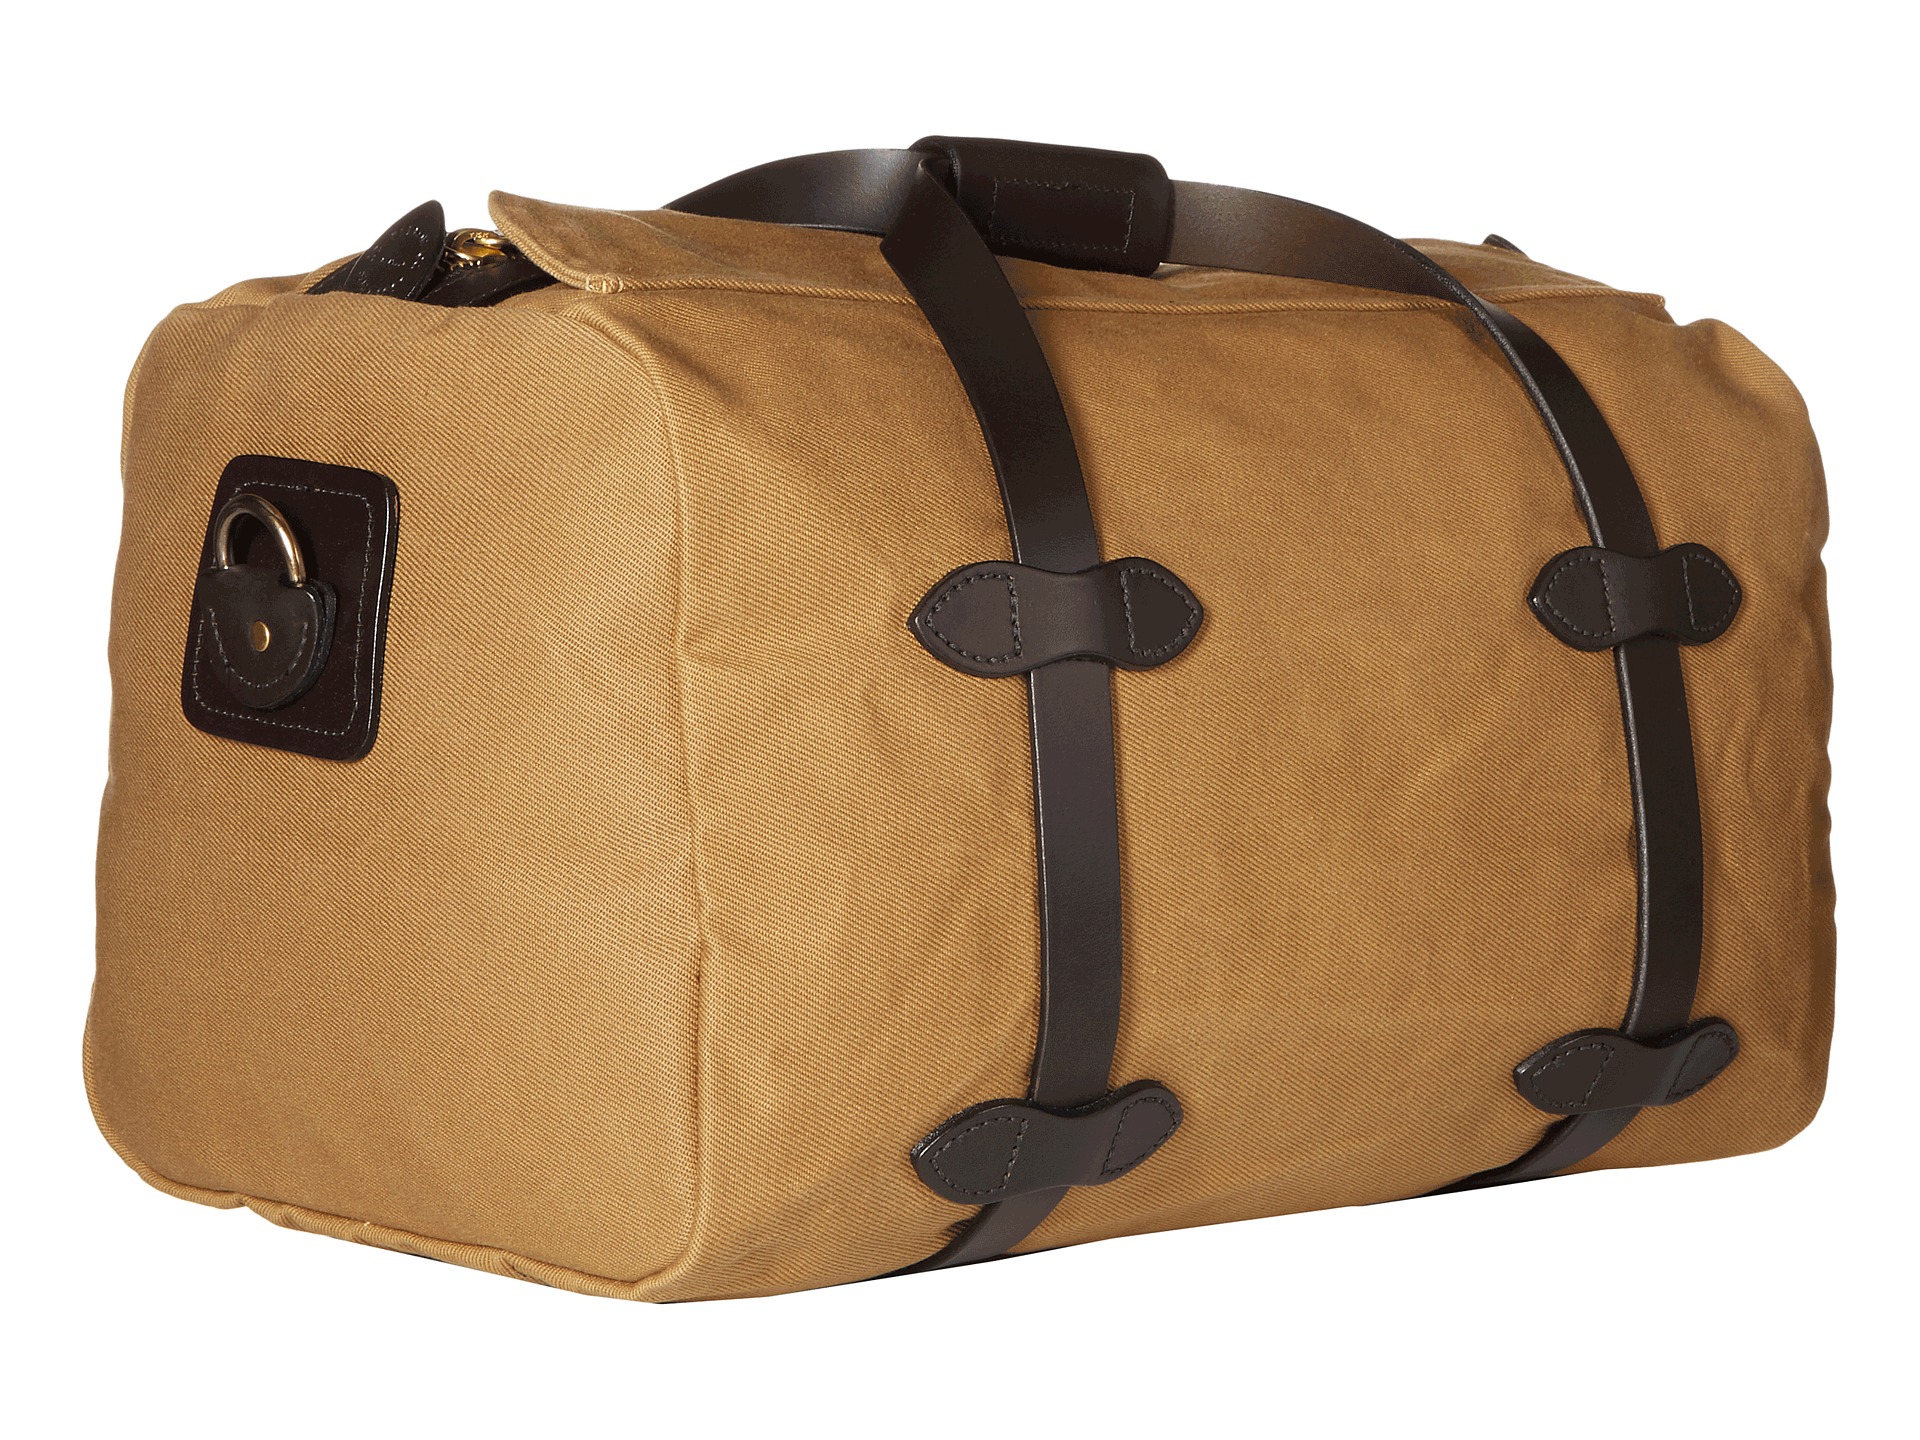 Filson Small Duffle Bag Tan - 0 Free Shipping BOTH Ways